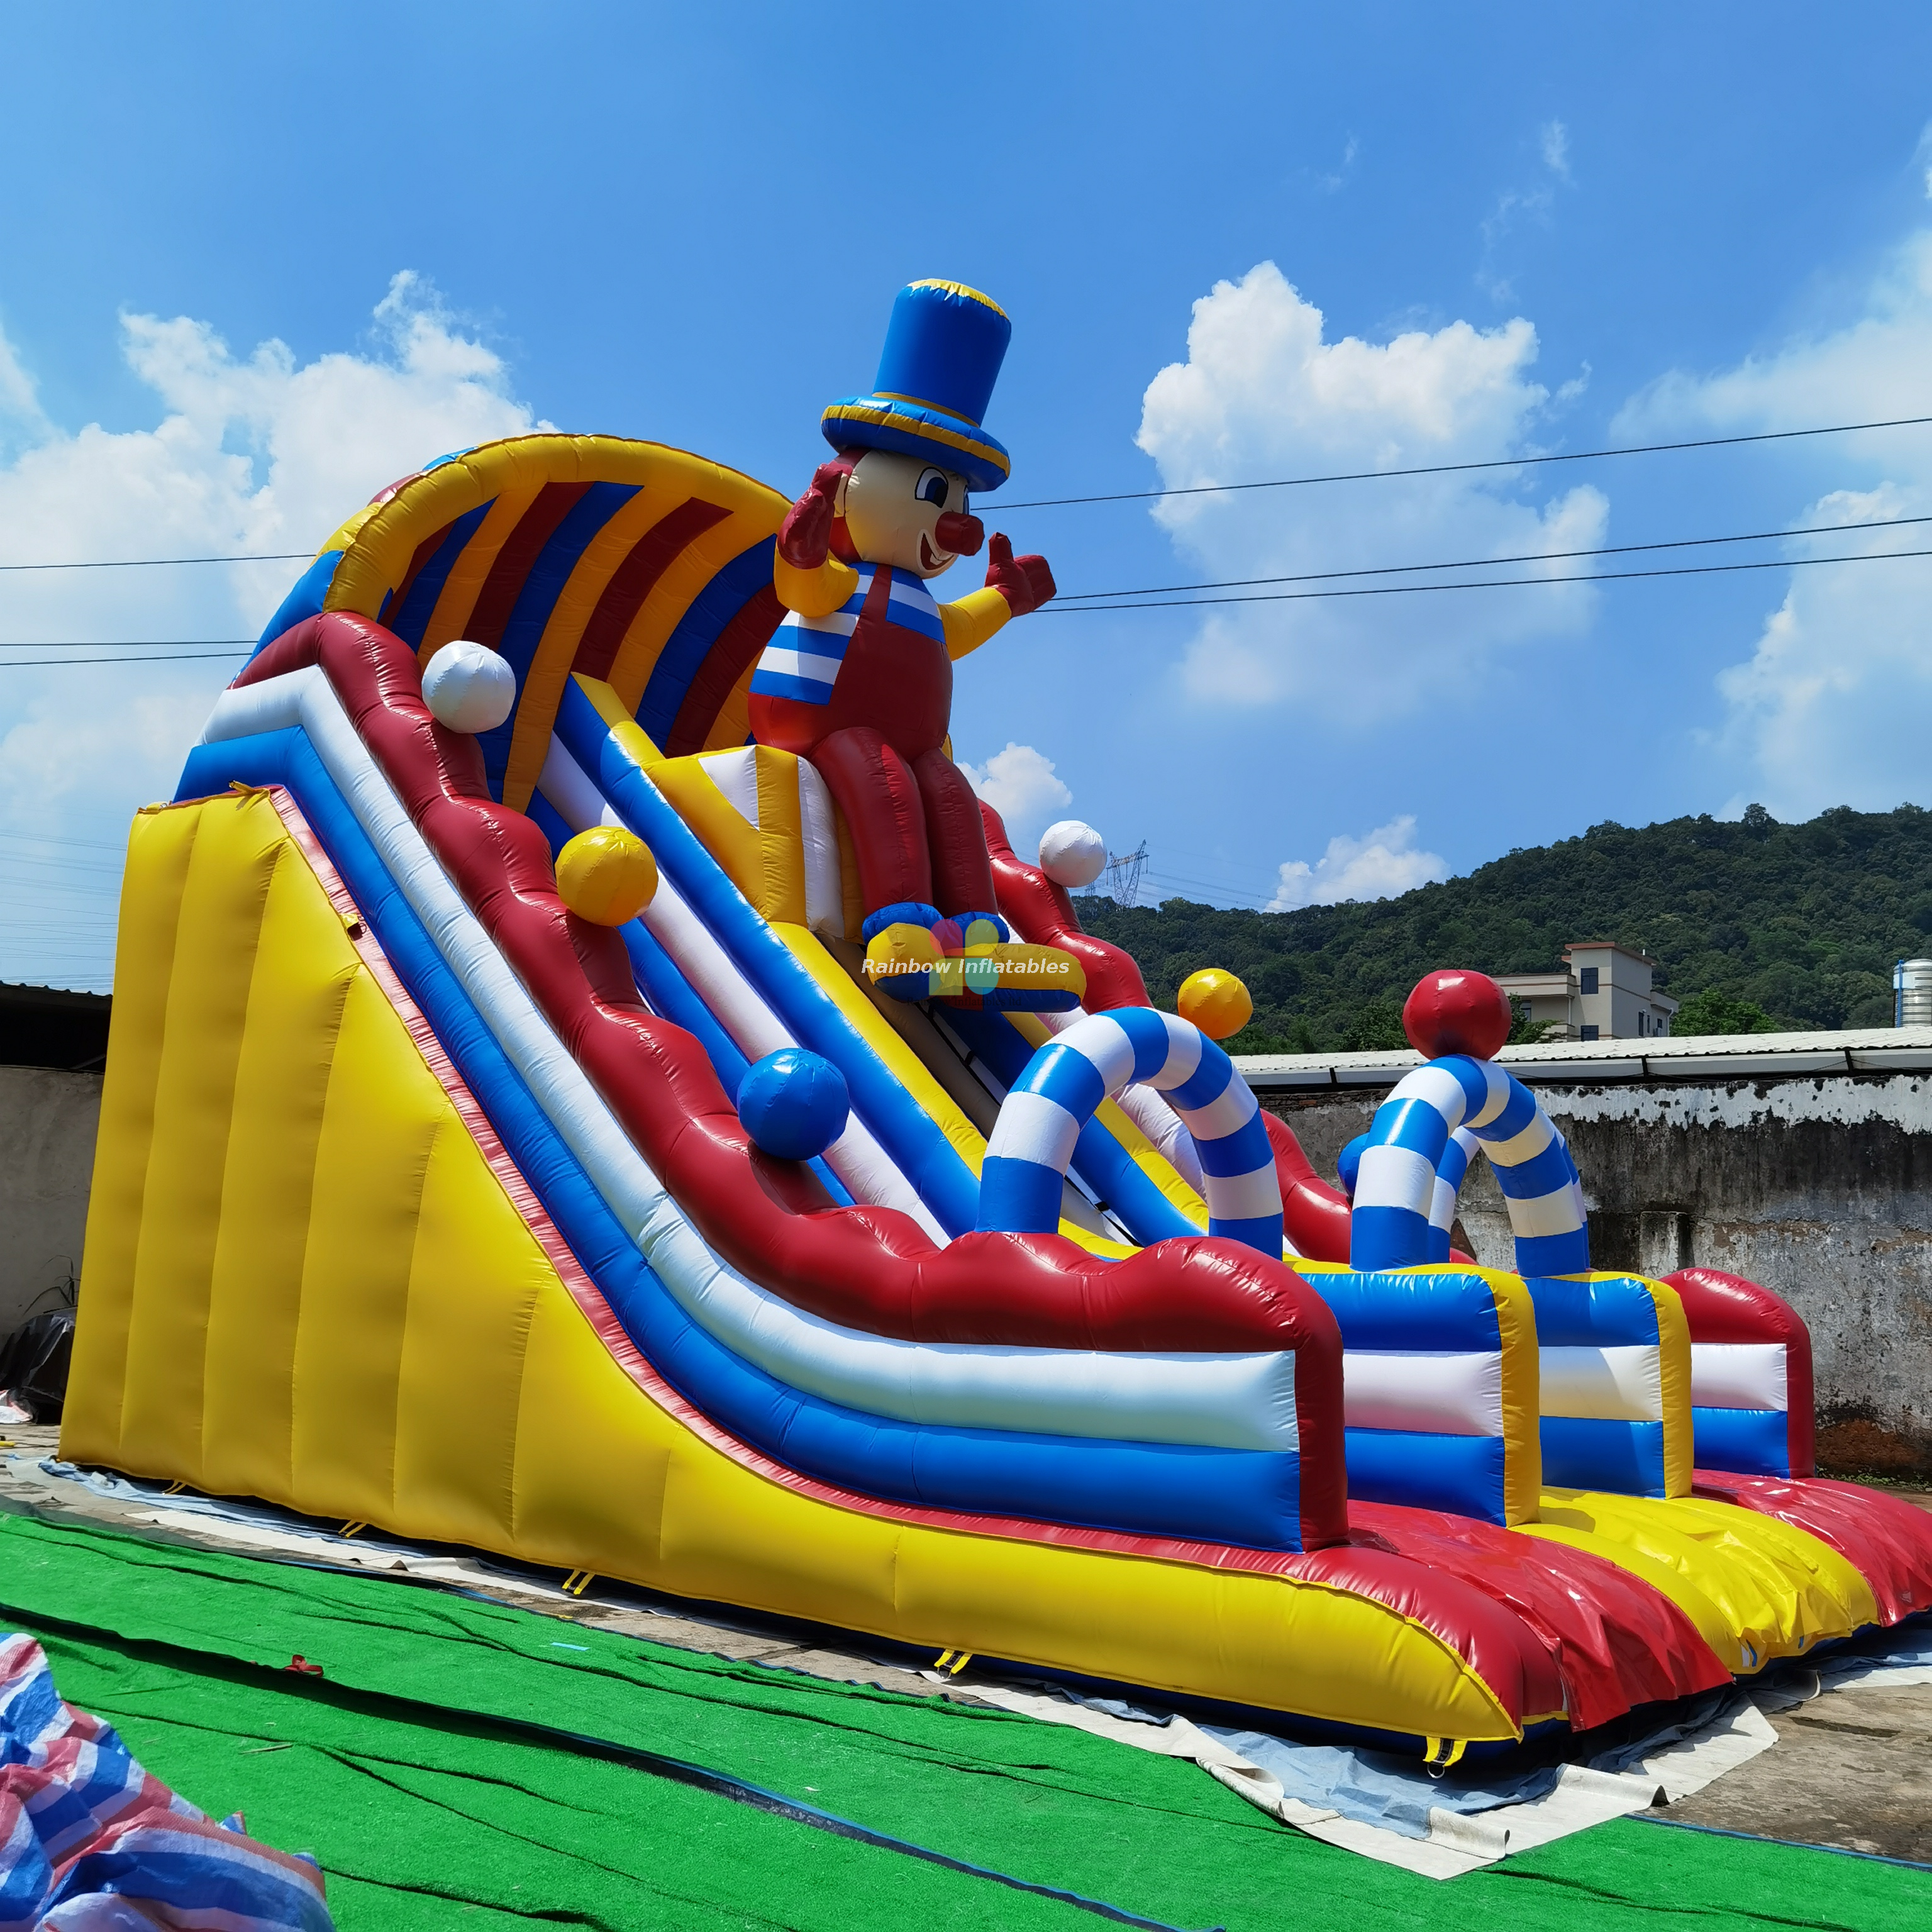 Rainbow inflatable slide for kids